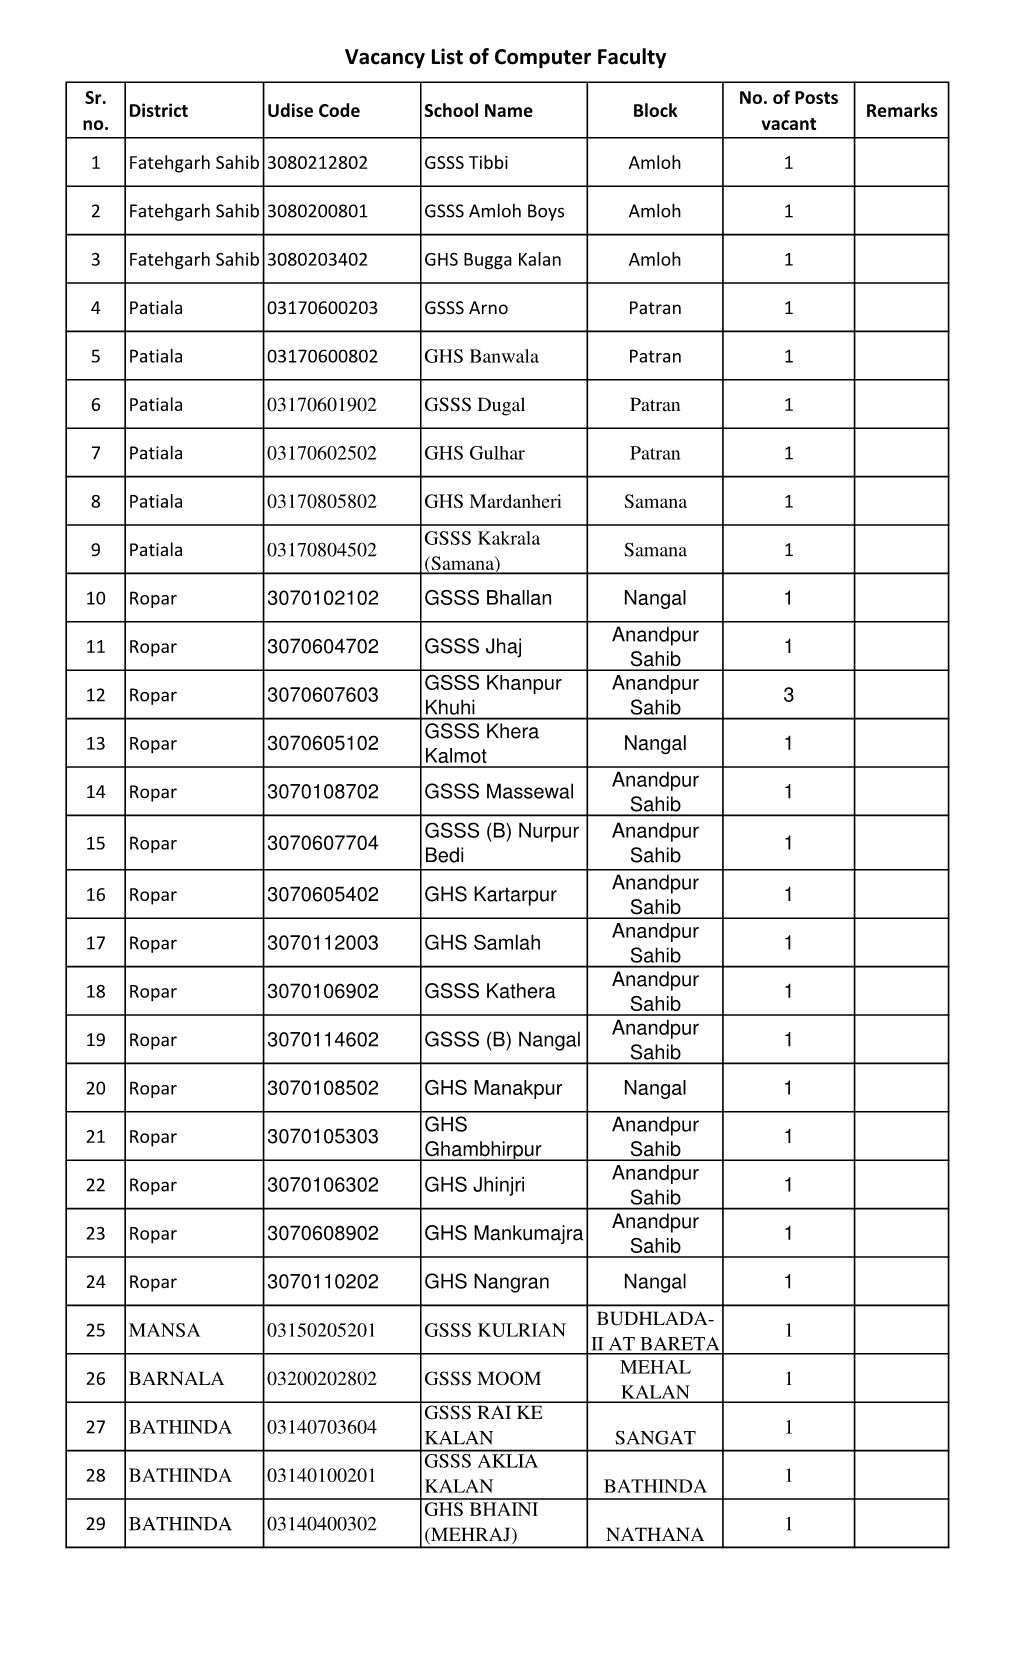 Vacancy List of Computer Faculty.Xlsx